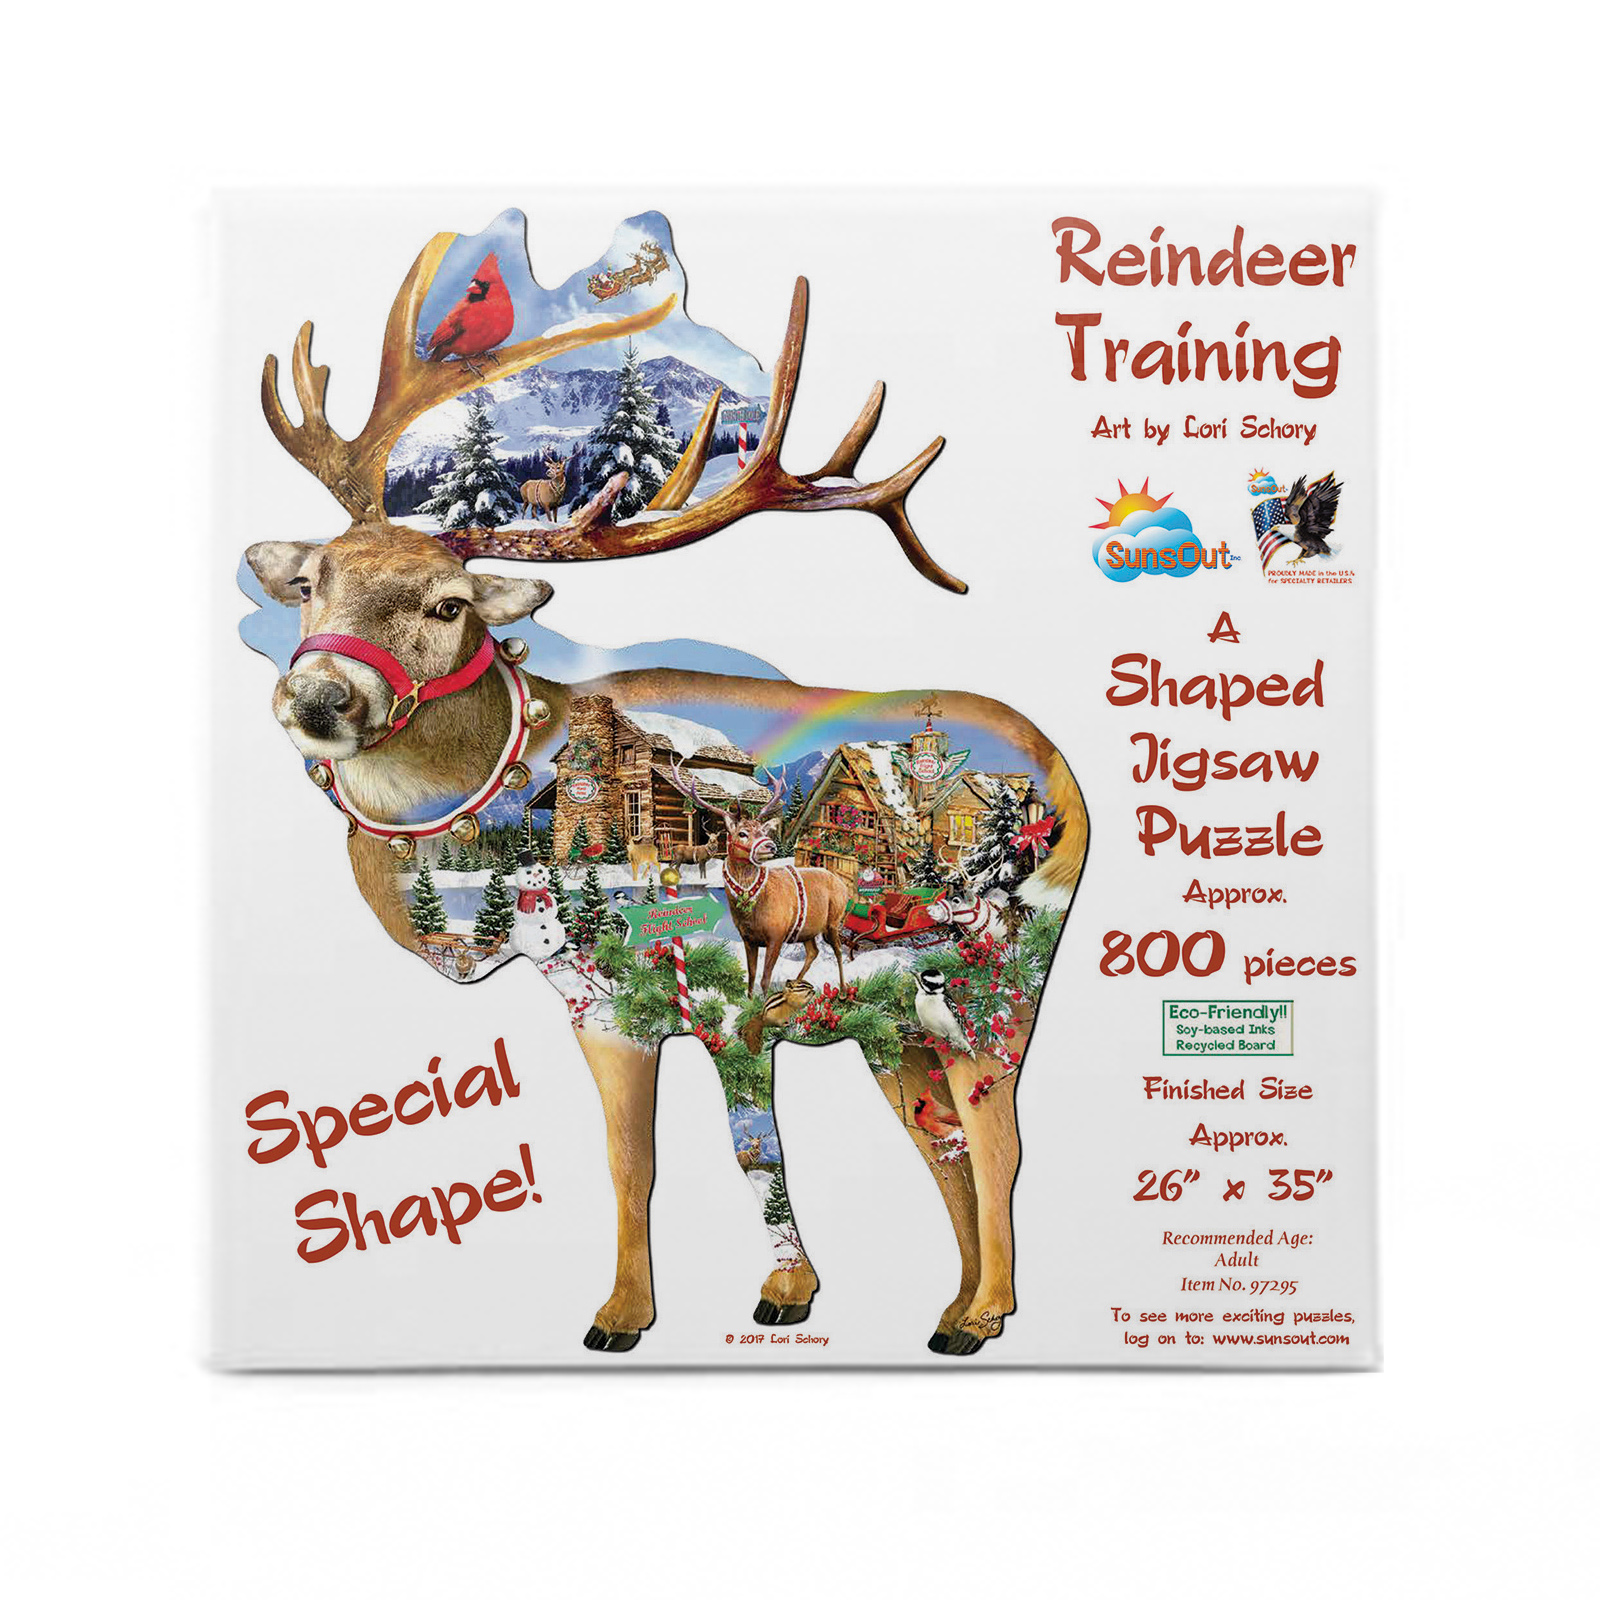 Reindeer Training